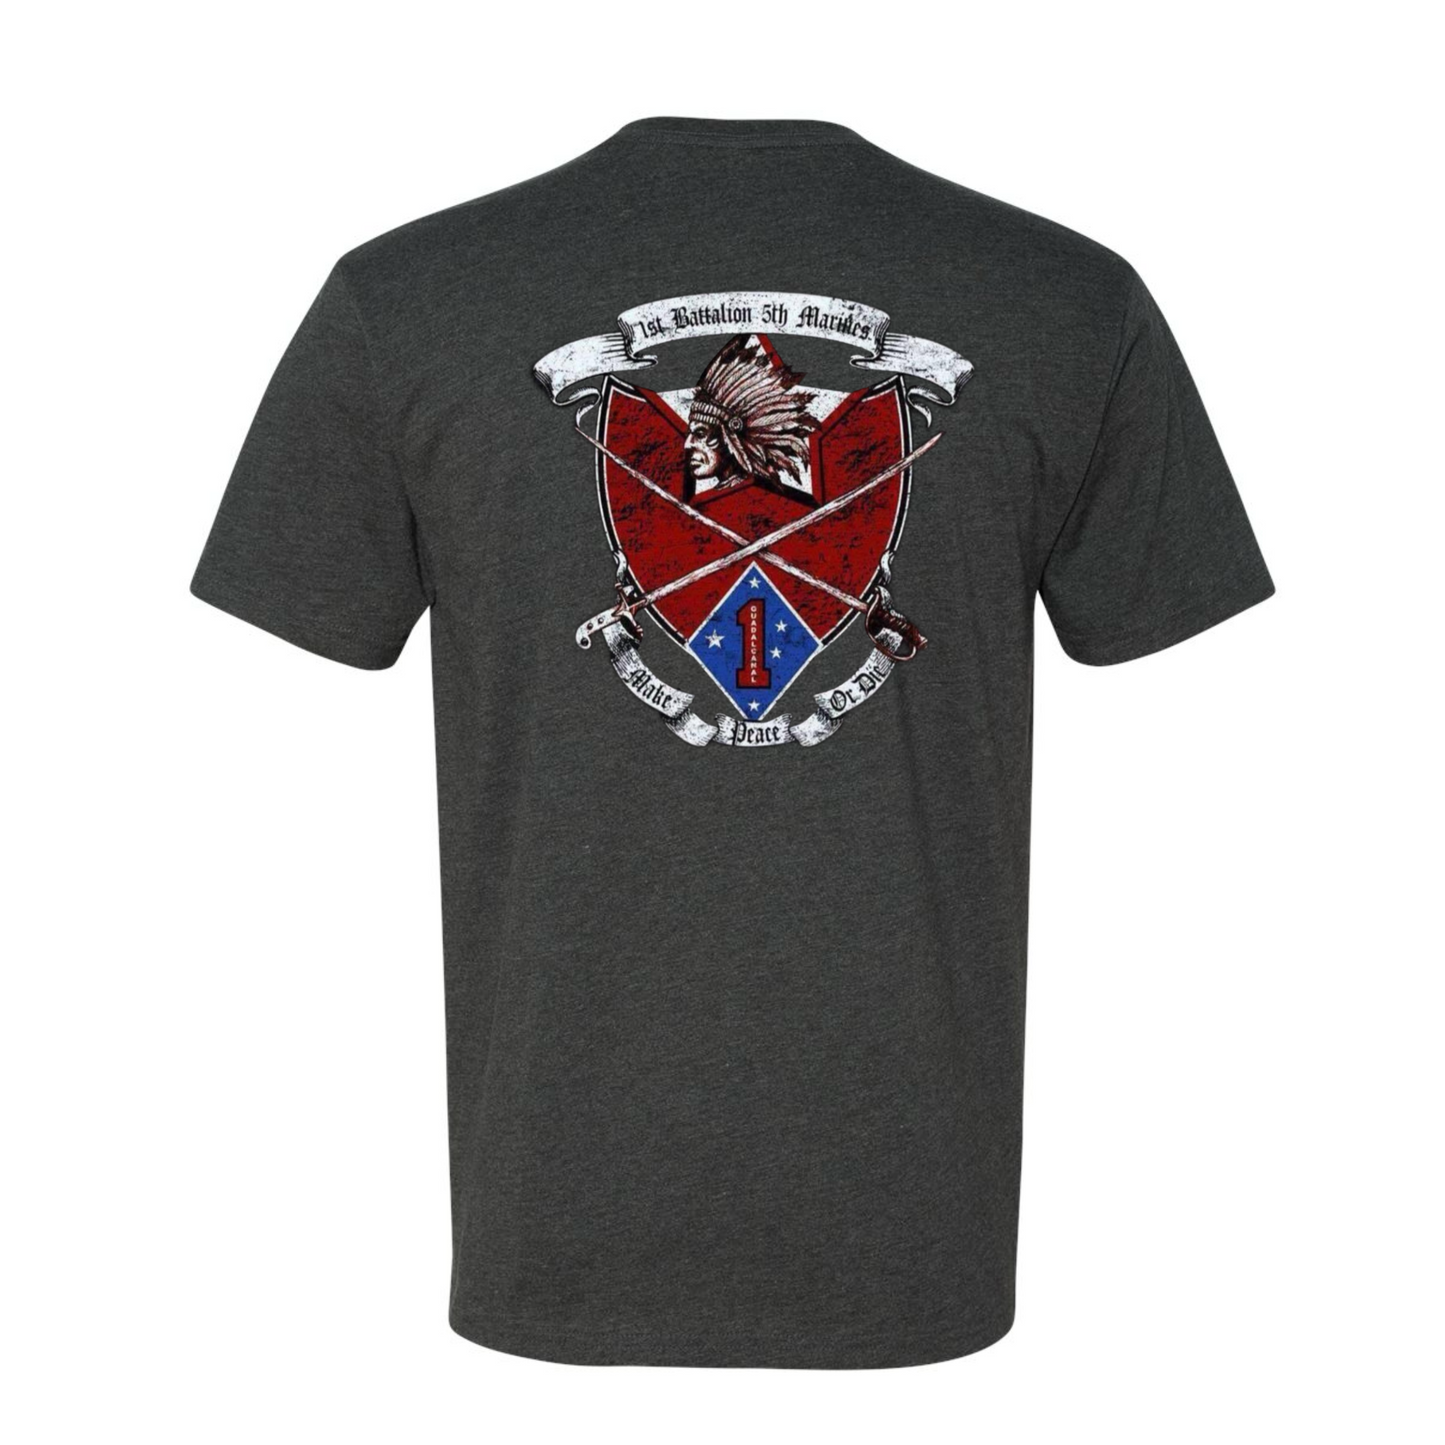 1st Battalion 5th Marines unit shirt